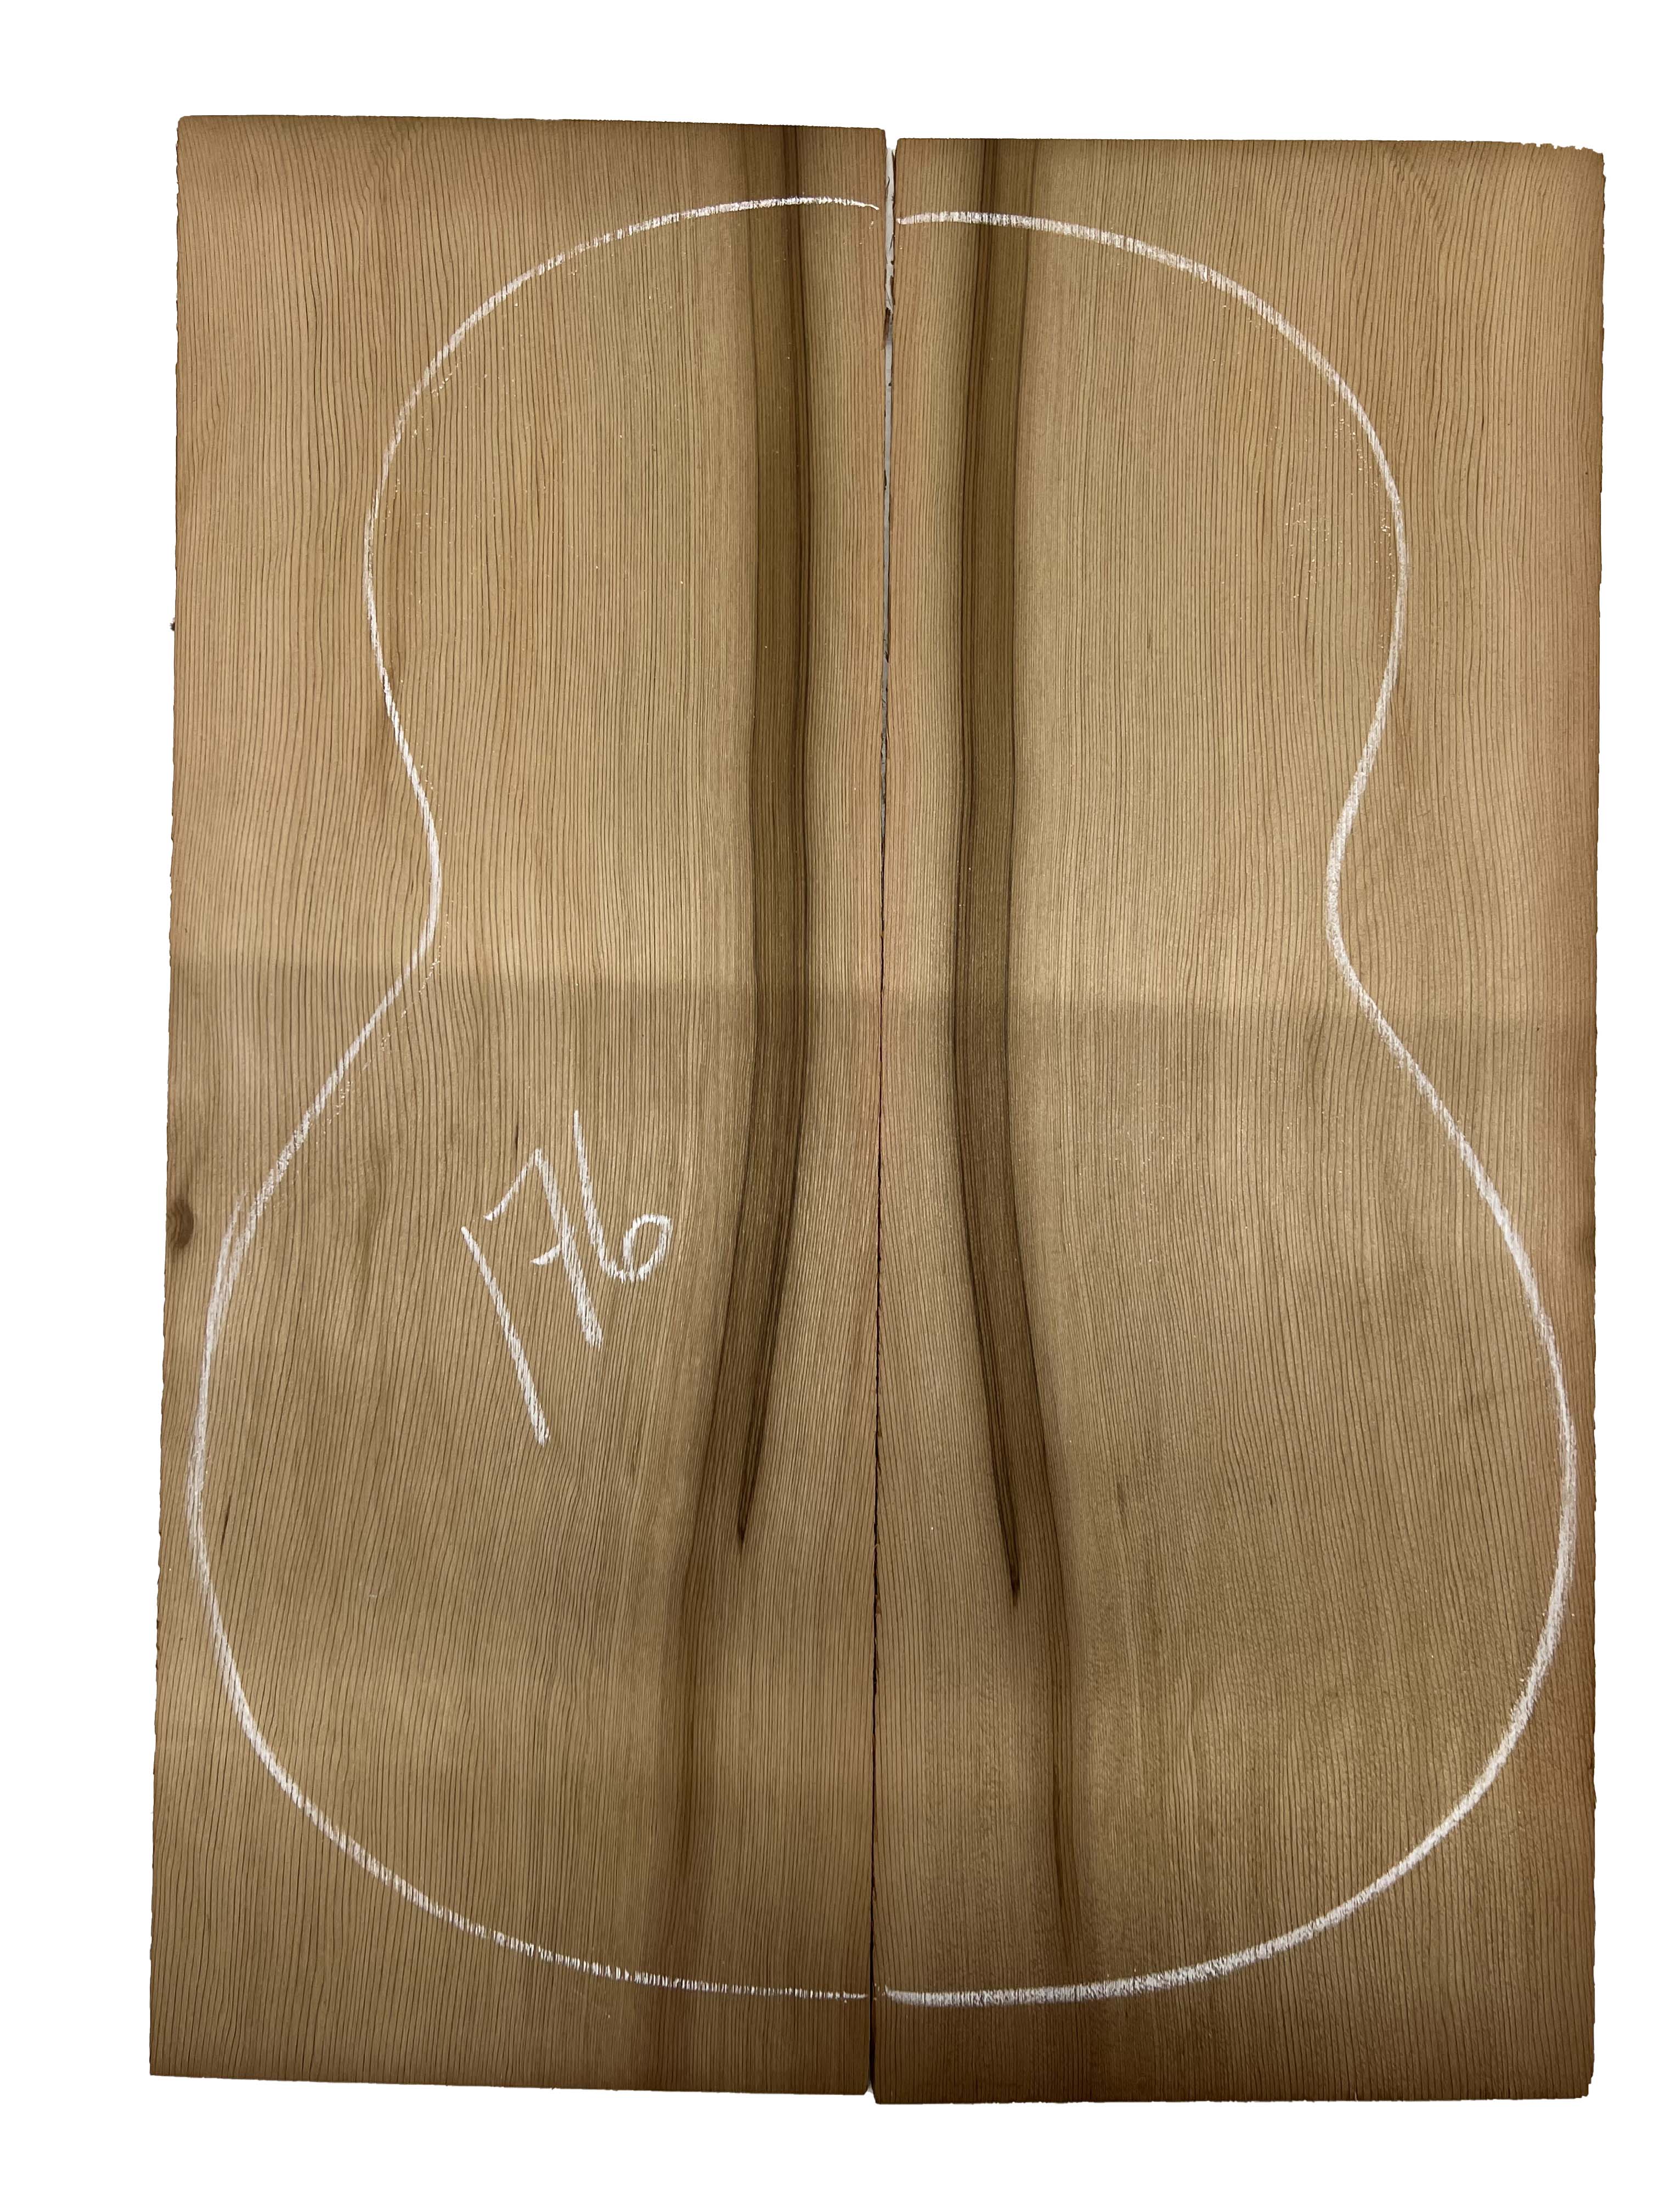 Spanish Cedar Guitar Back Classical Luthier tonewood -21&quot; x 7-3/4&quot; x 1/8&quot; 